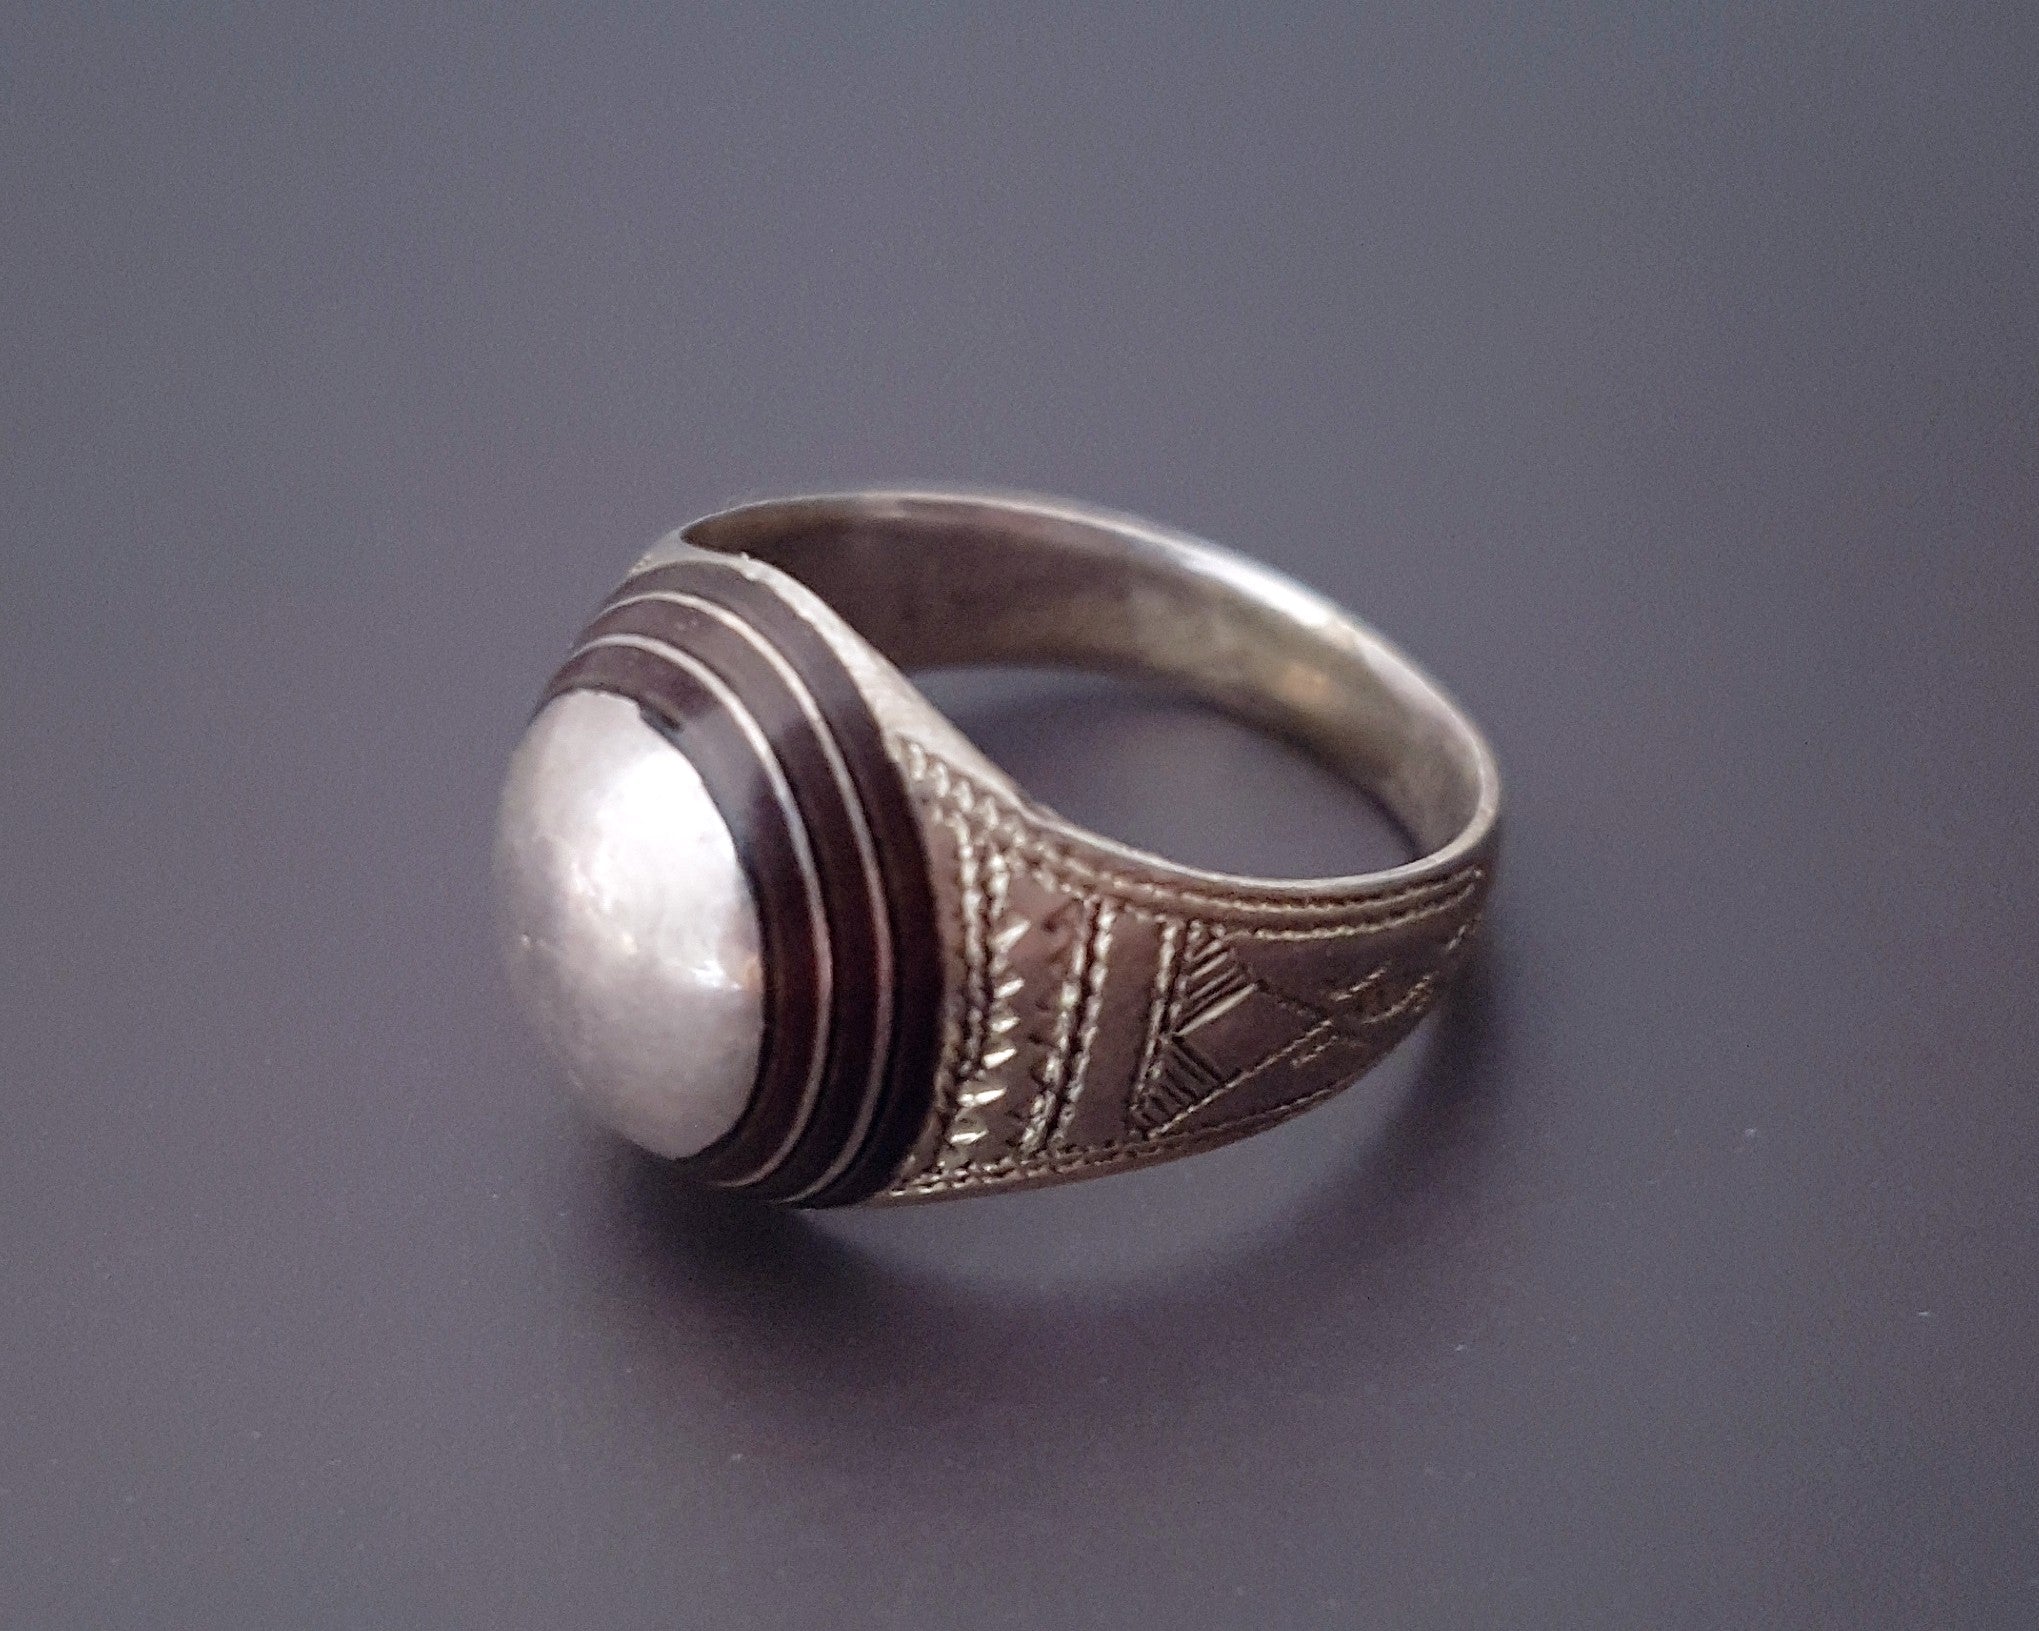 Tuareg Ring with Ebony Inlay - Size 7.5